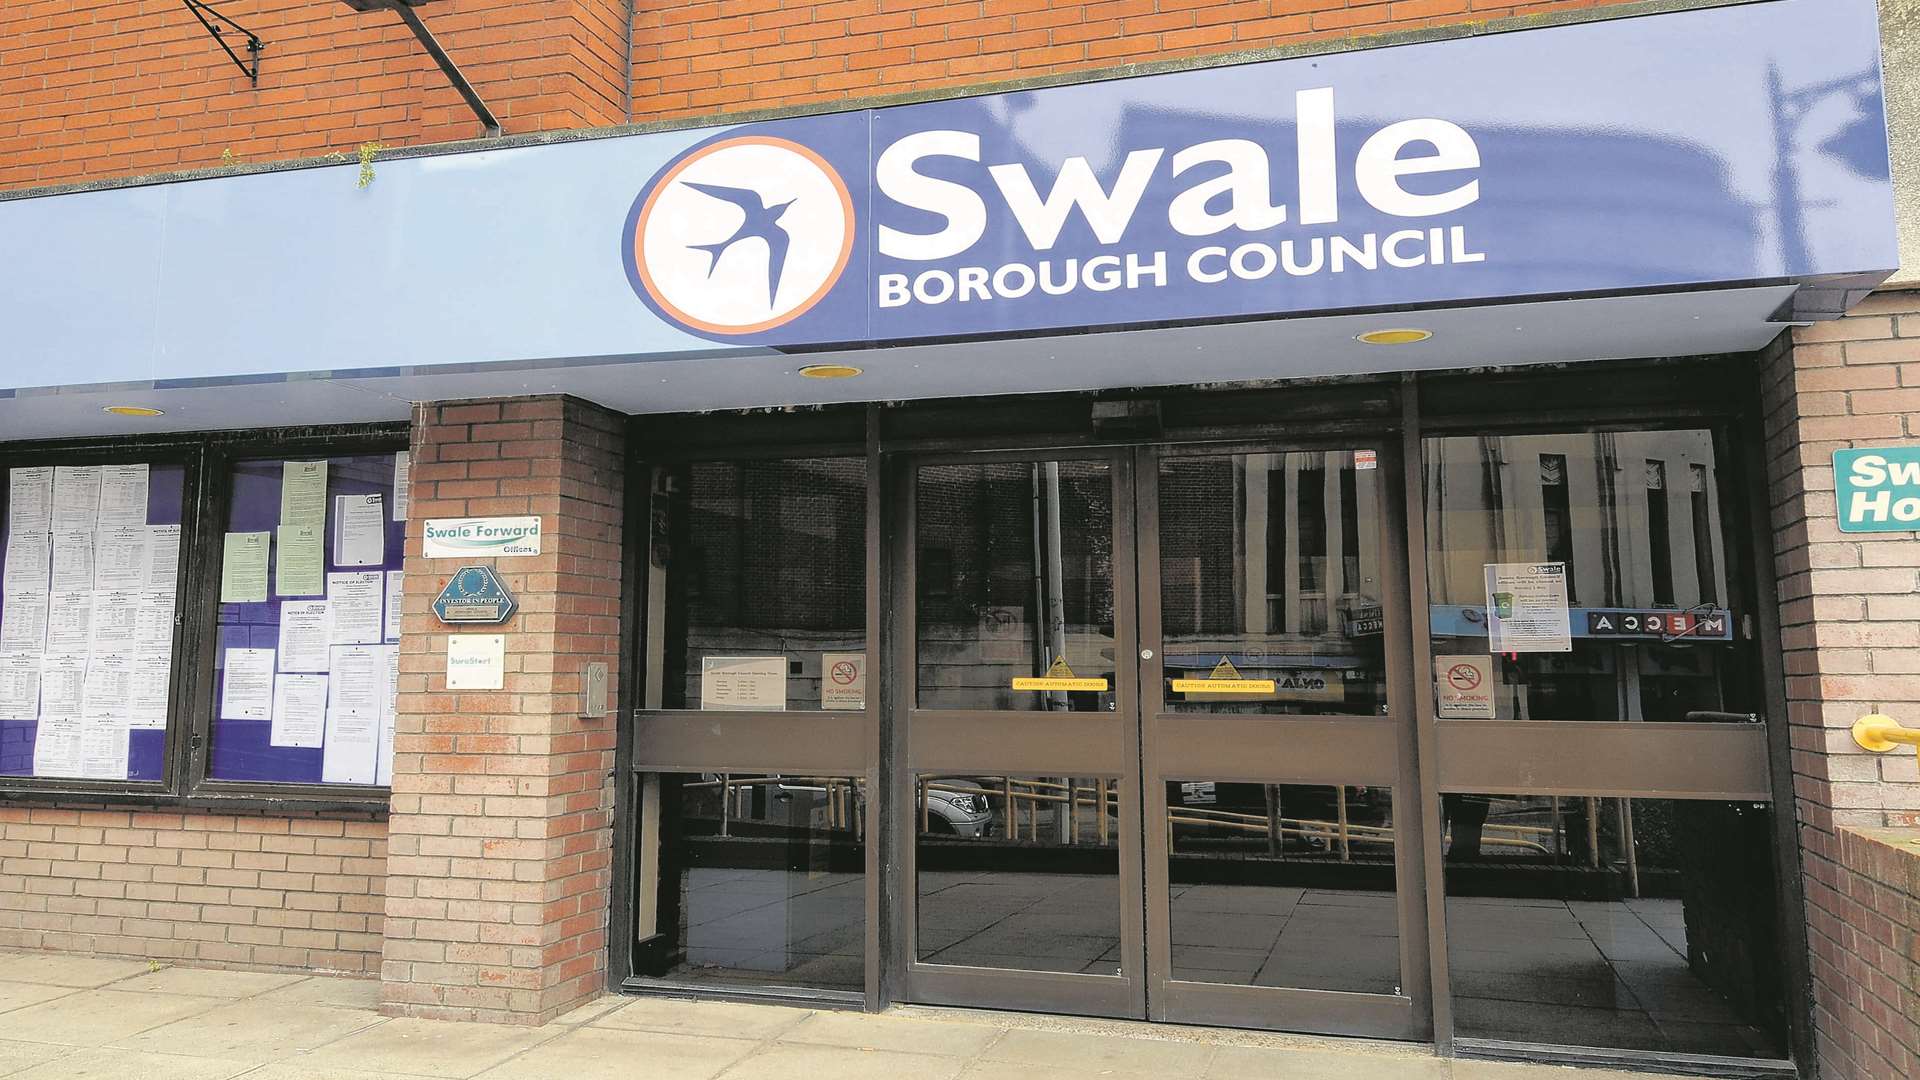 Swale Borough Council headquarters in East Street, Sittingbourne